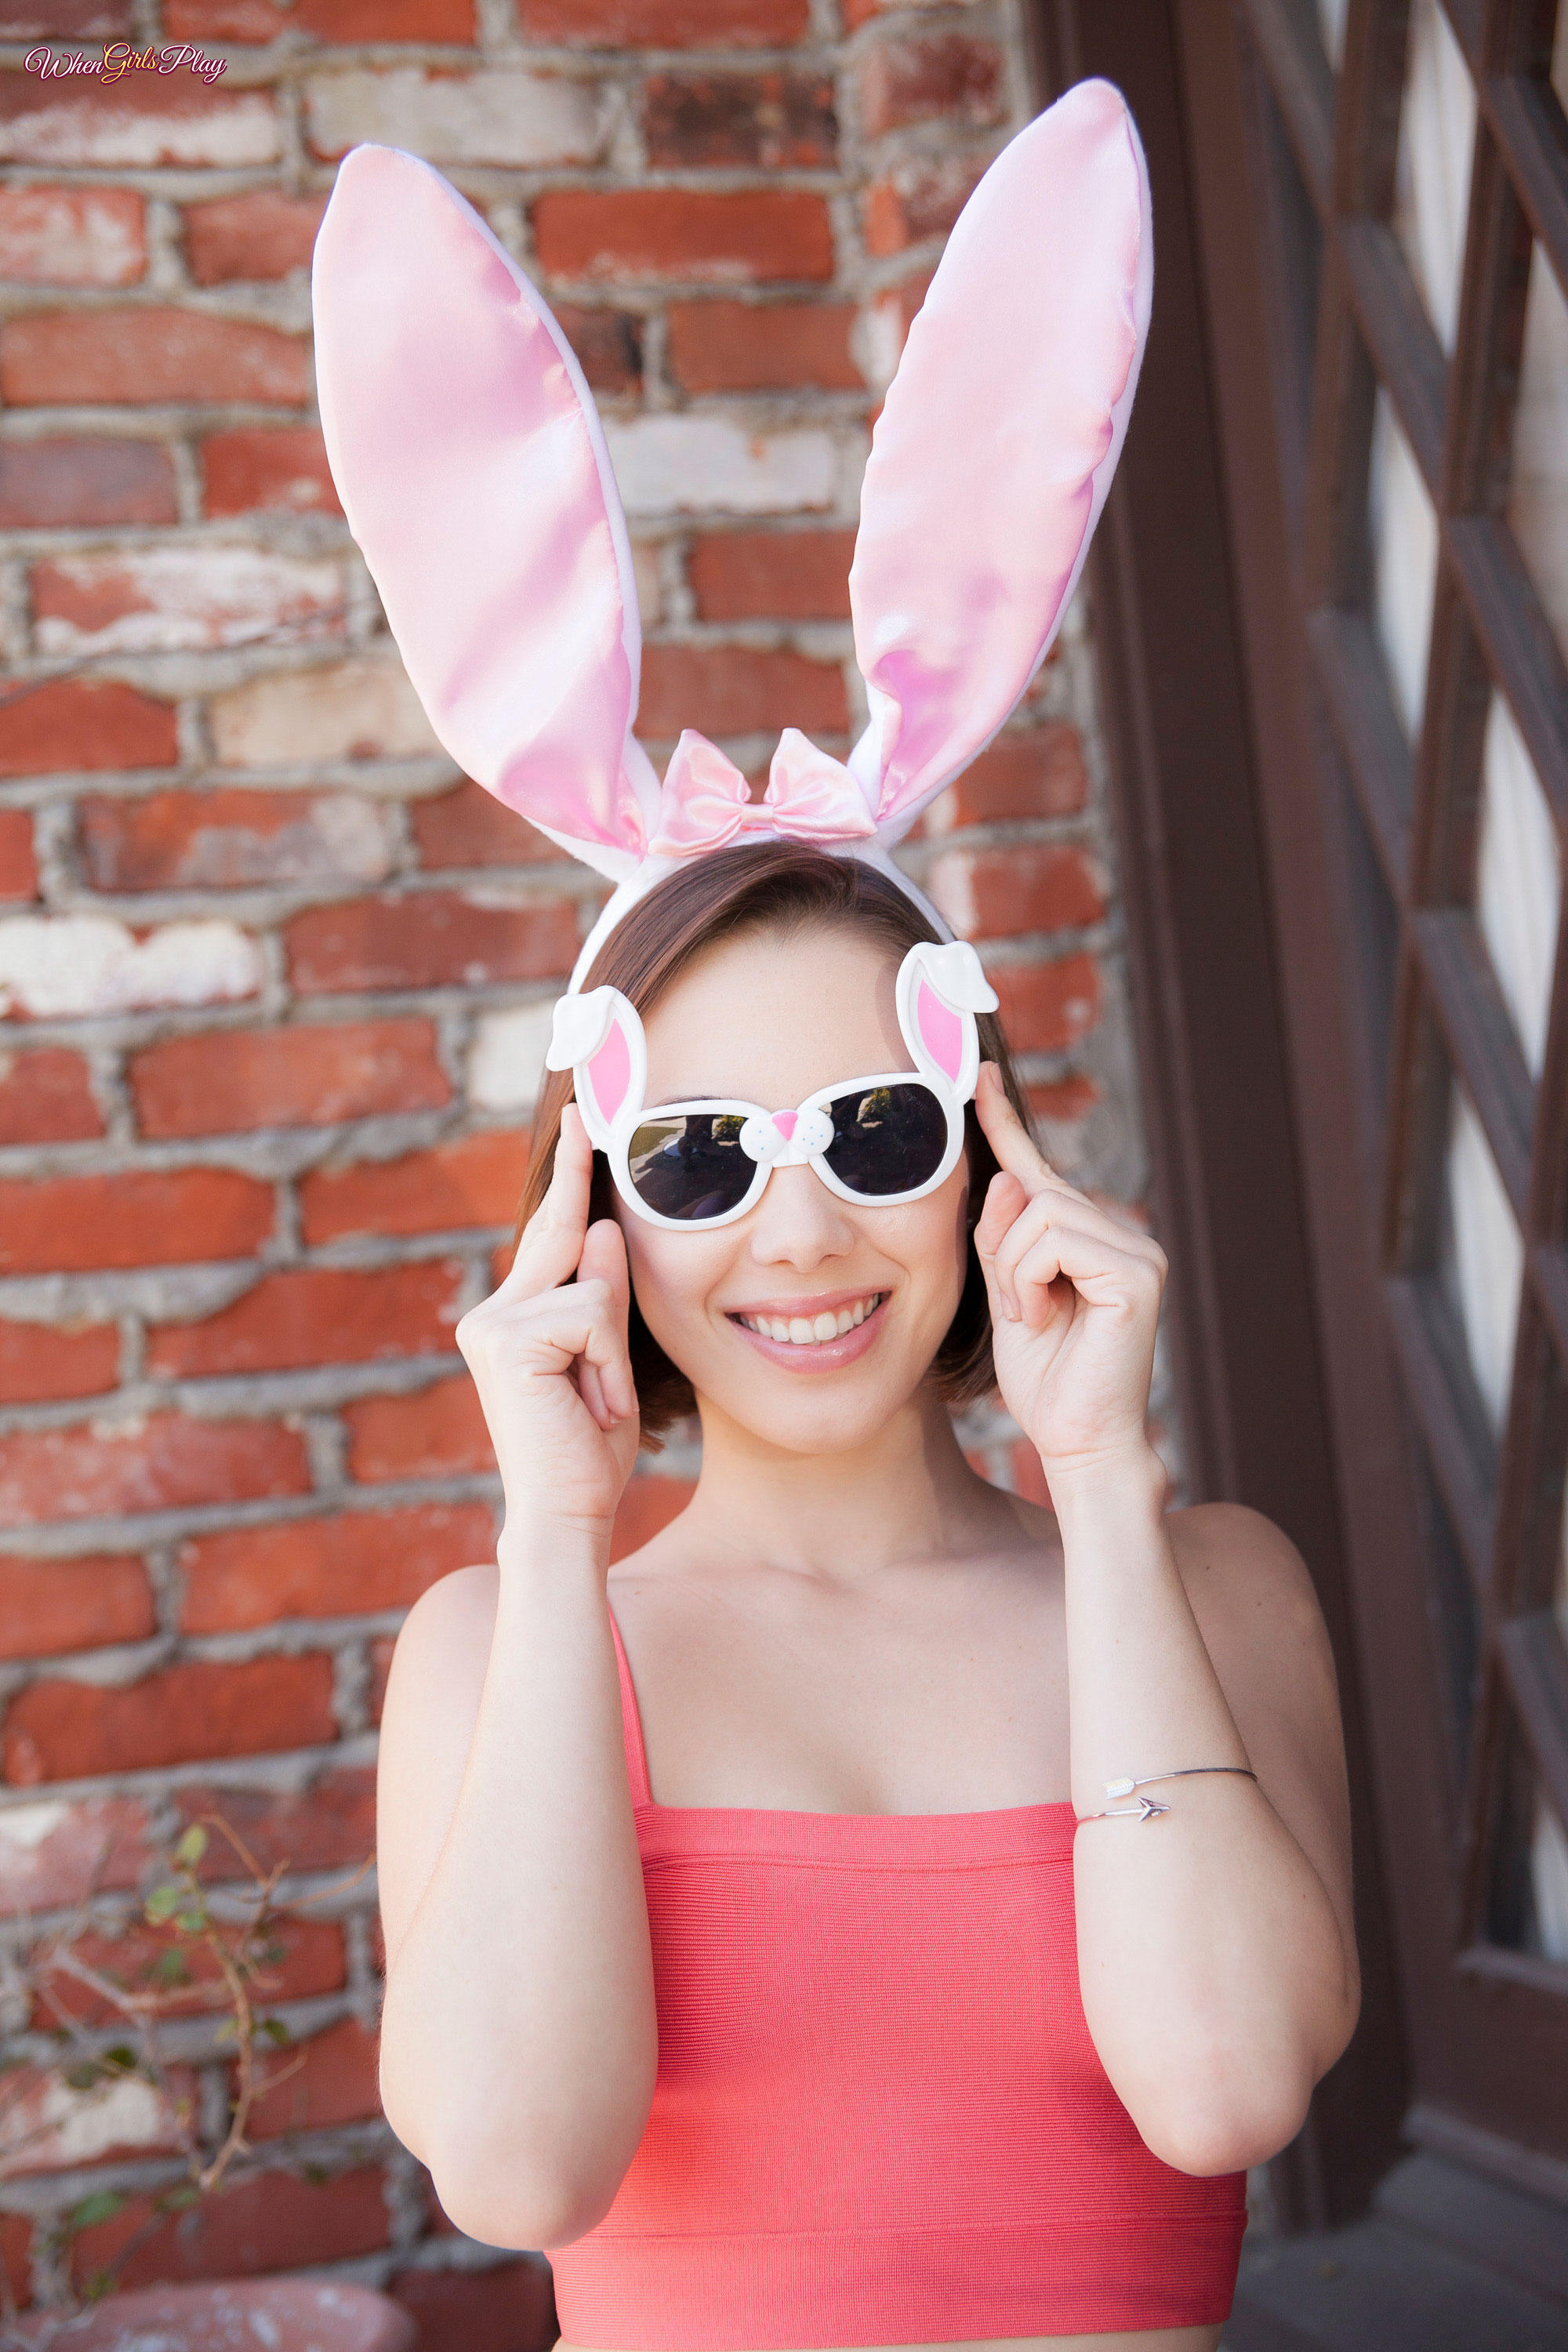 Twistys 'Easter Egg Cunt' starring Jenna Sativa (Photo 14)